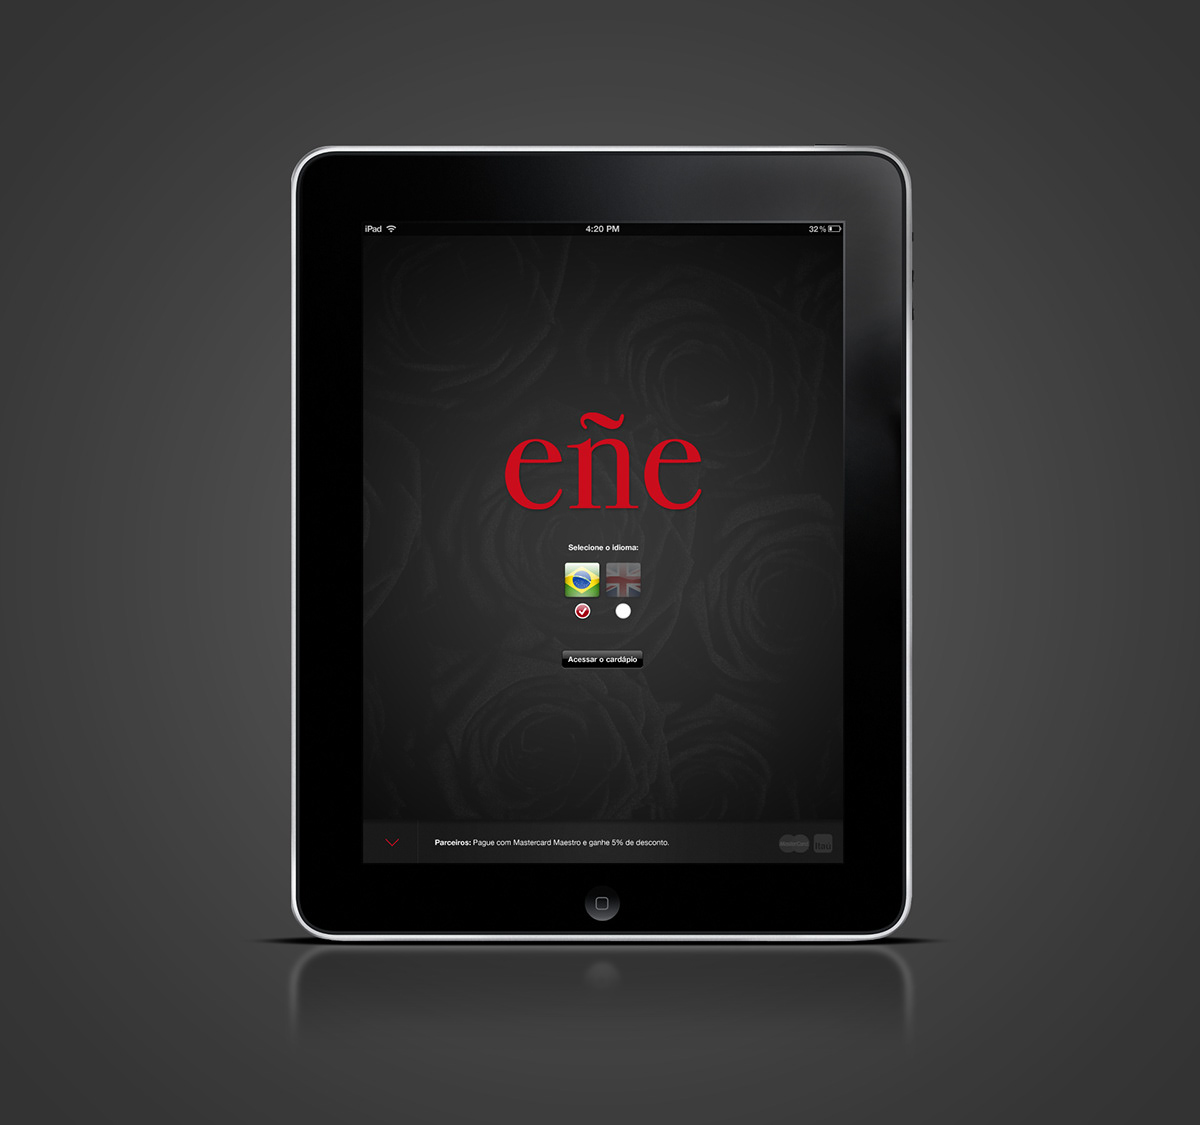 restaurant gastronomy gastronomia eñe iPad Interface vgui GUI